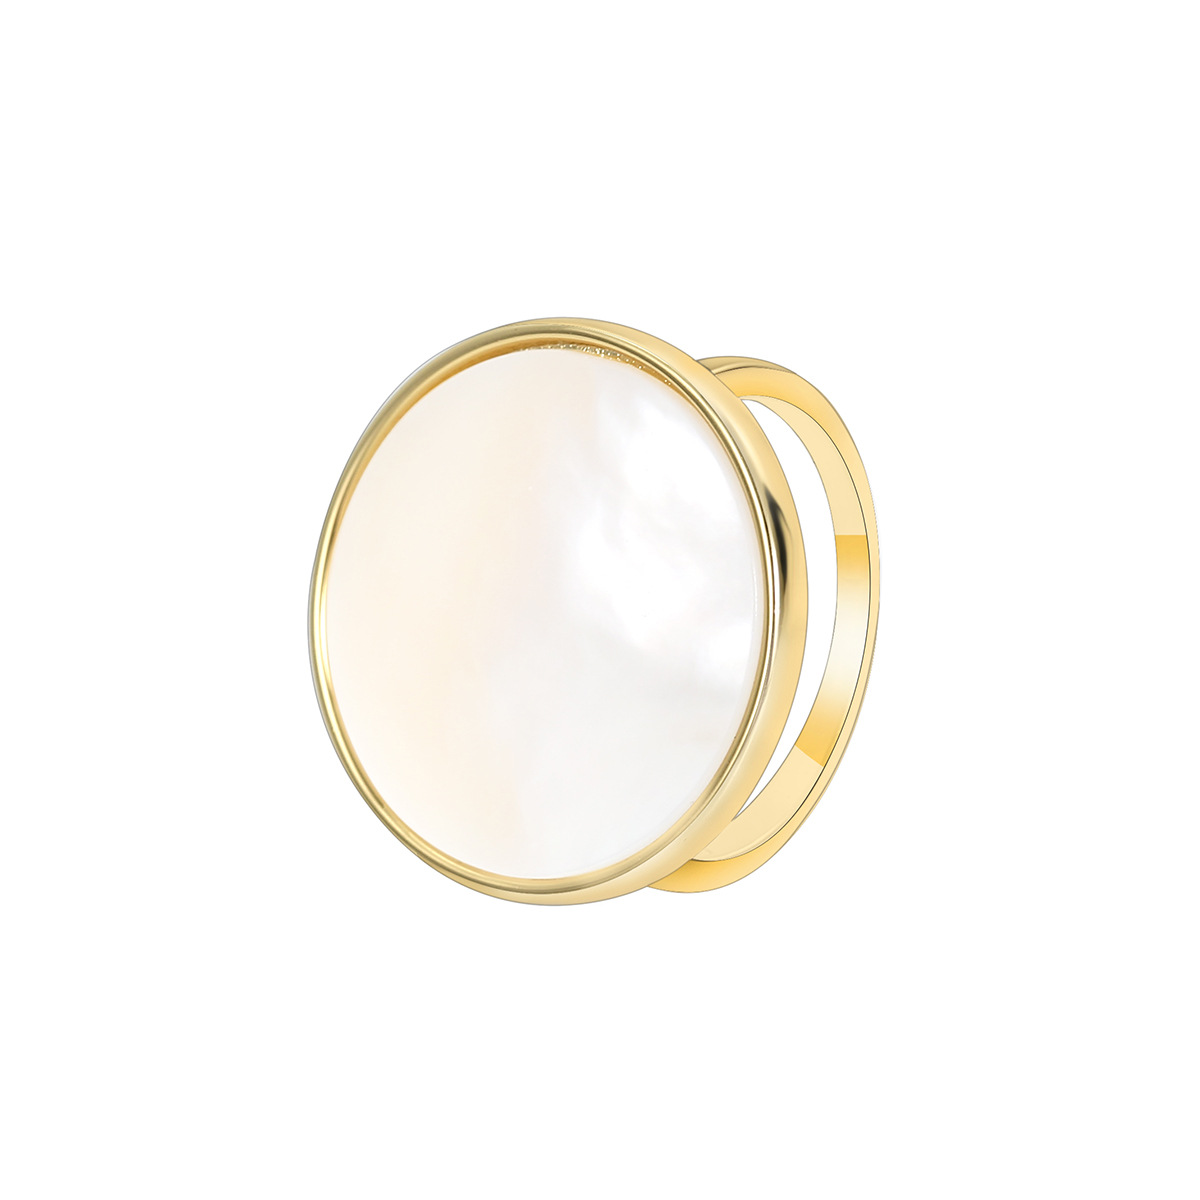 1:Gold white shell ring